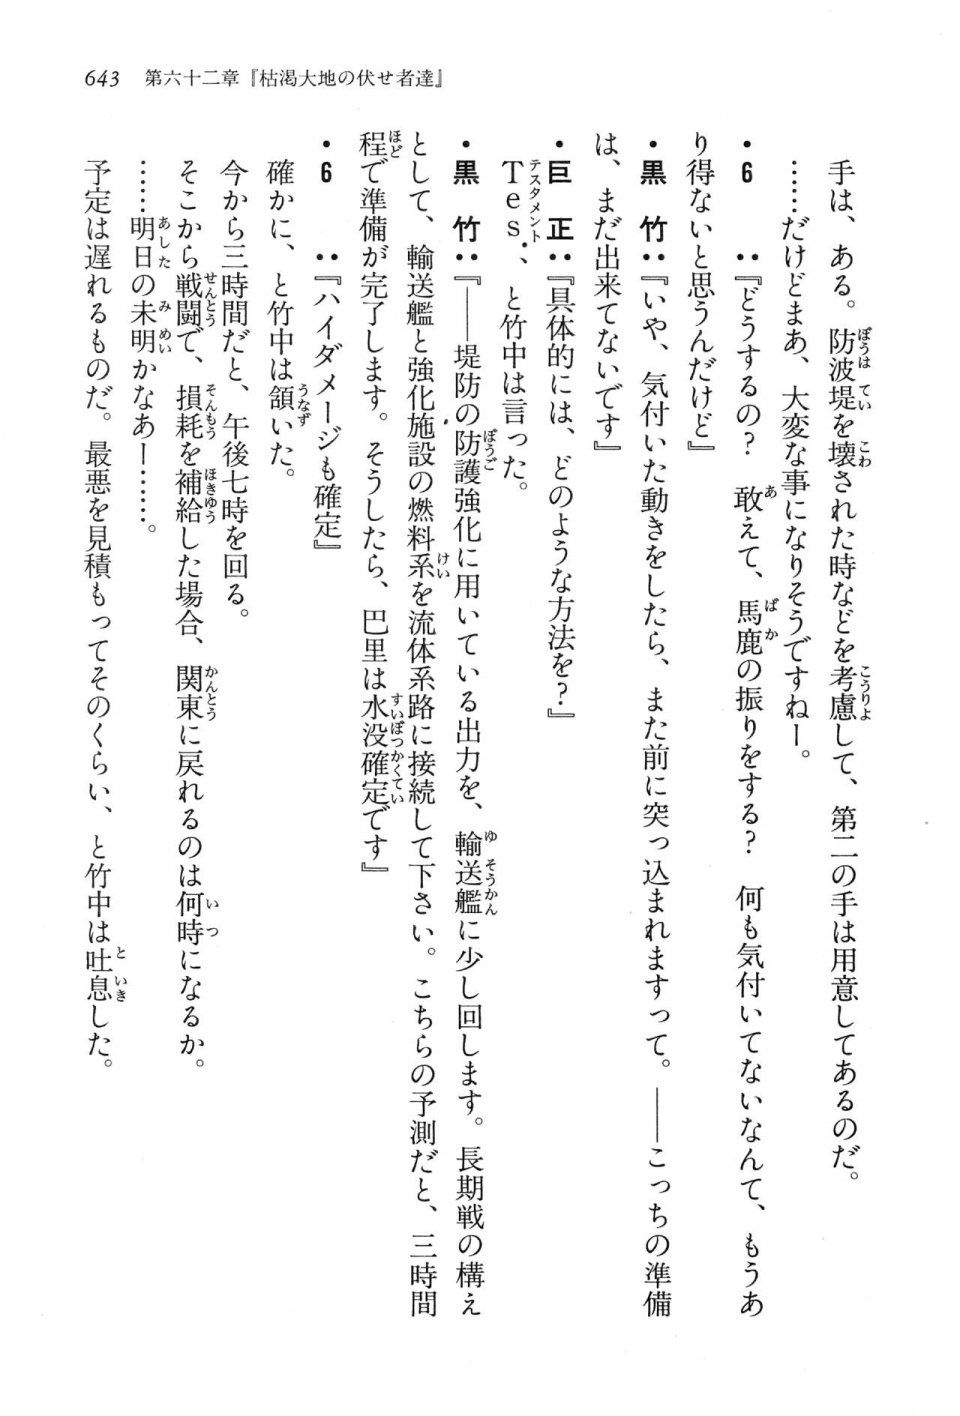 Kyoukai Senjou no Horizon LN Vol 15(6C) Part 2 - Photo #113